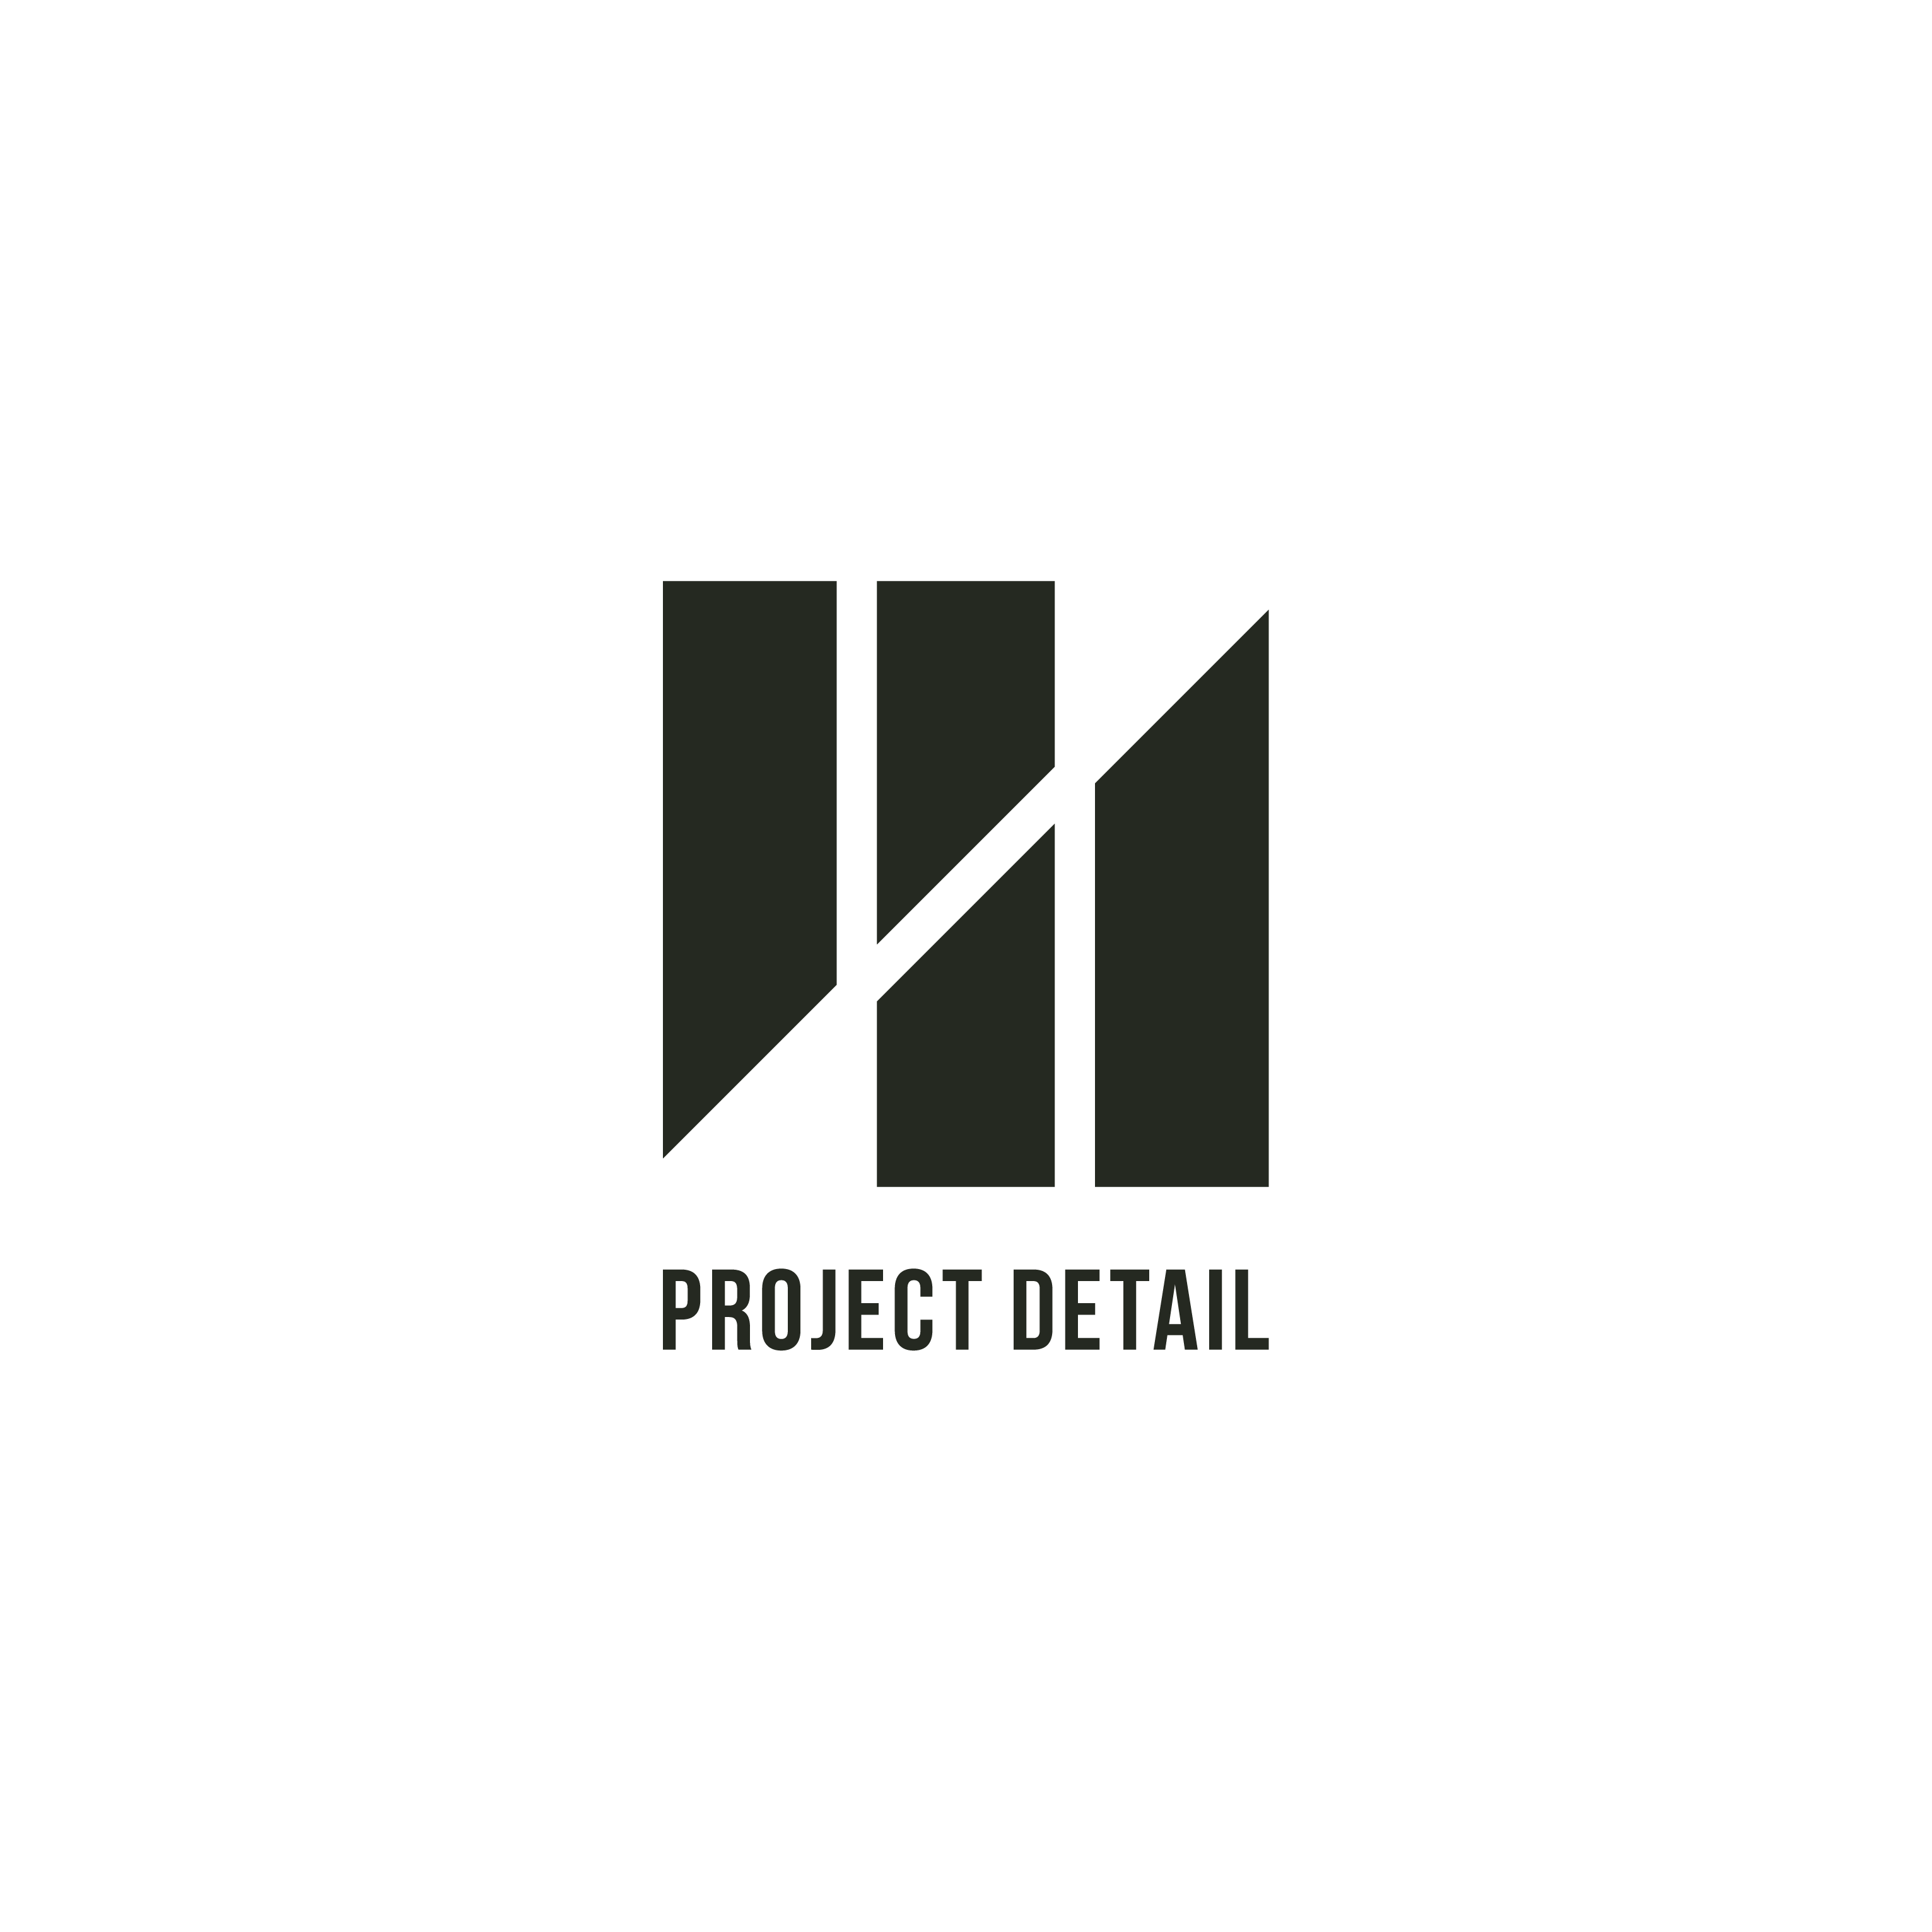 Detail Company Logo - Logo design for Project Detail, an Australian auto detailing company